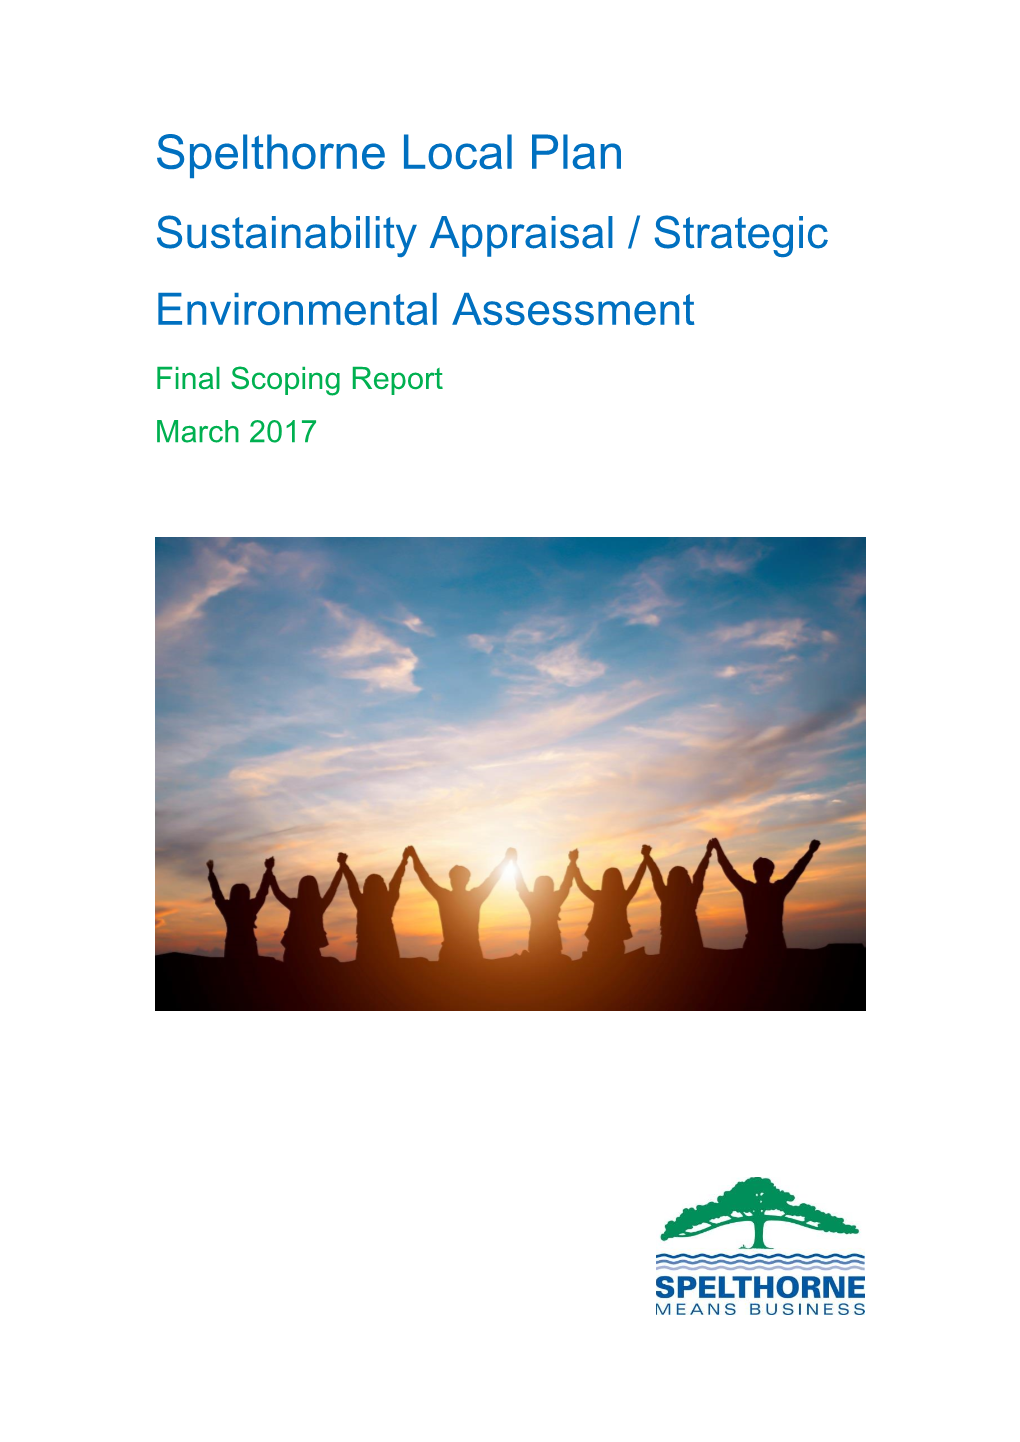 Sustainability Appraisal/Strategic Environmental Assessment